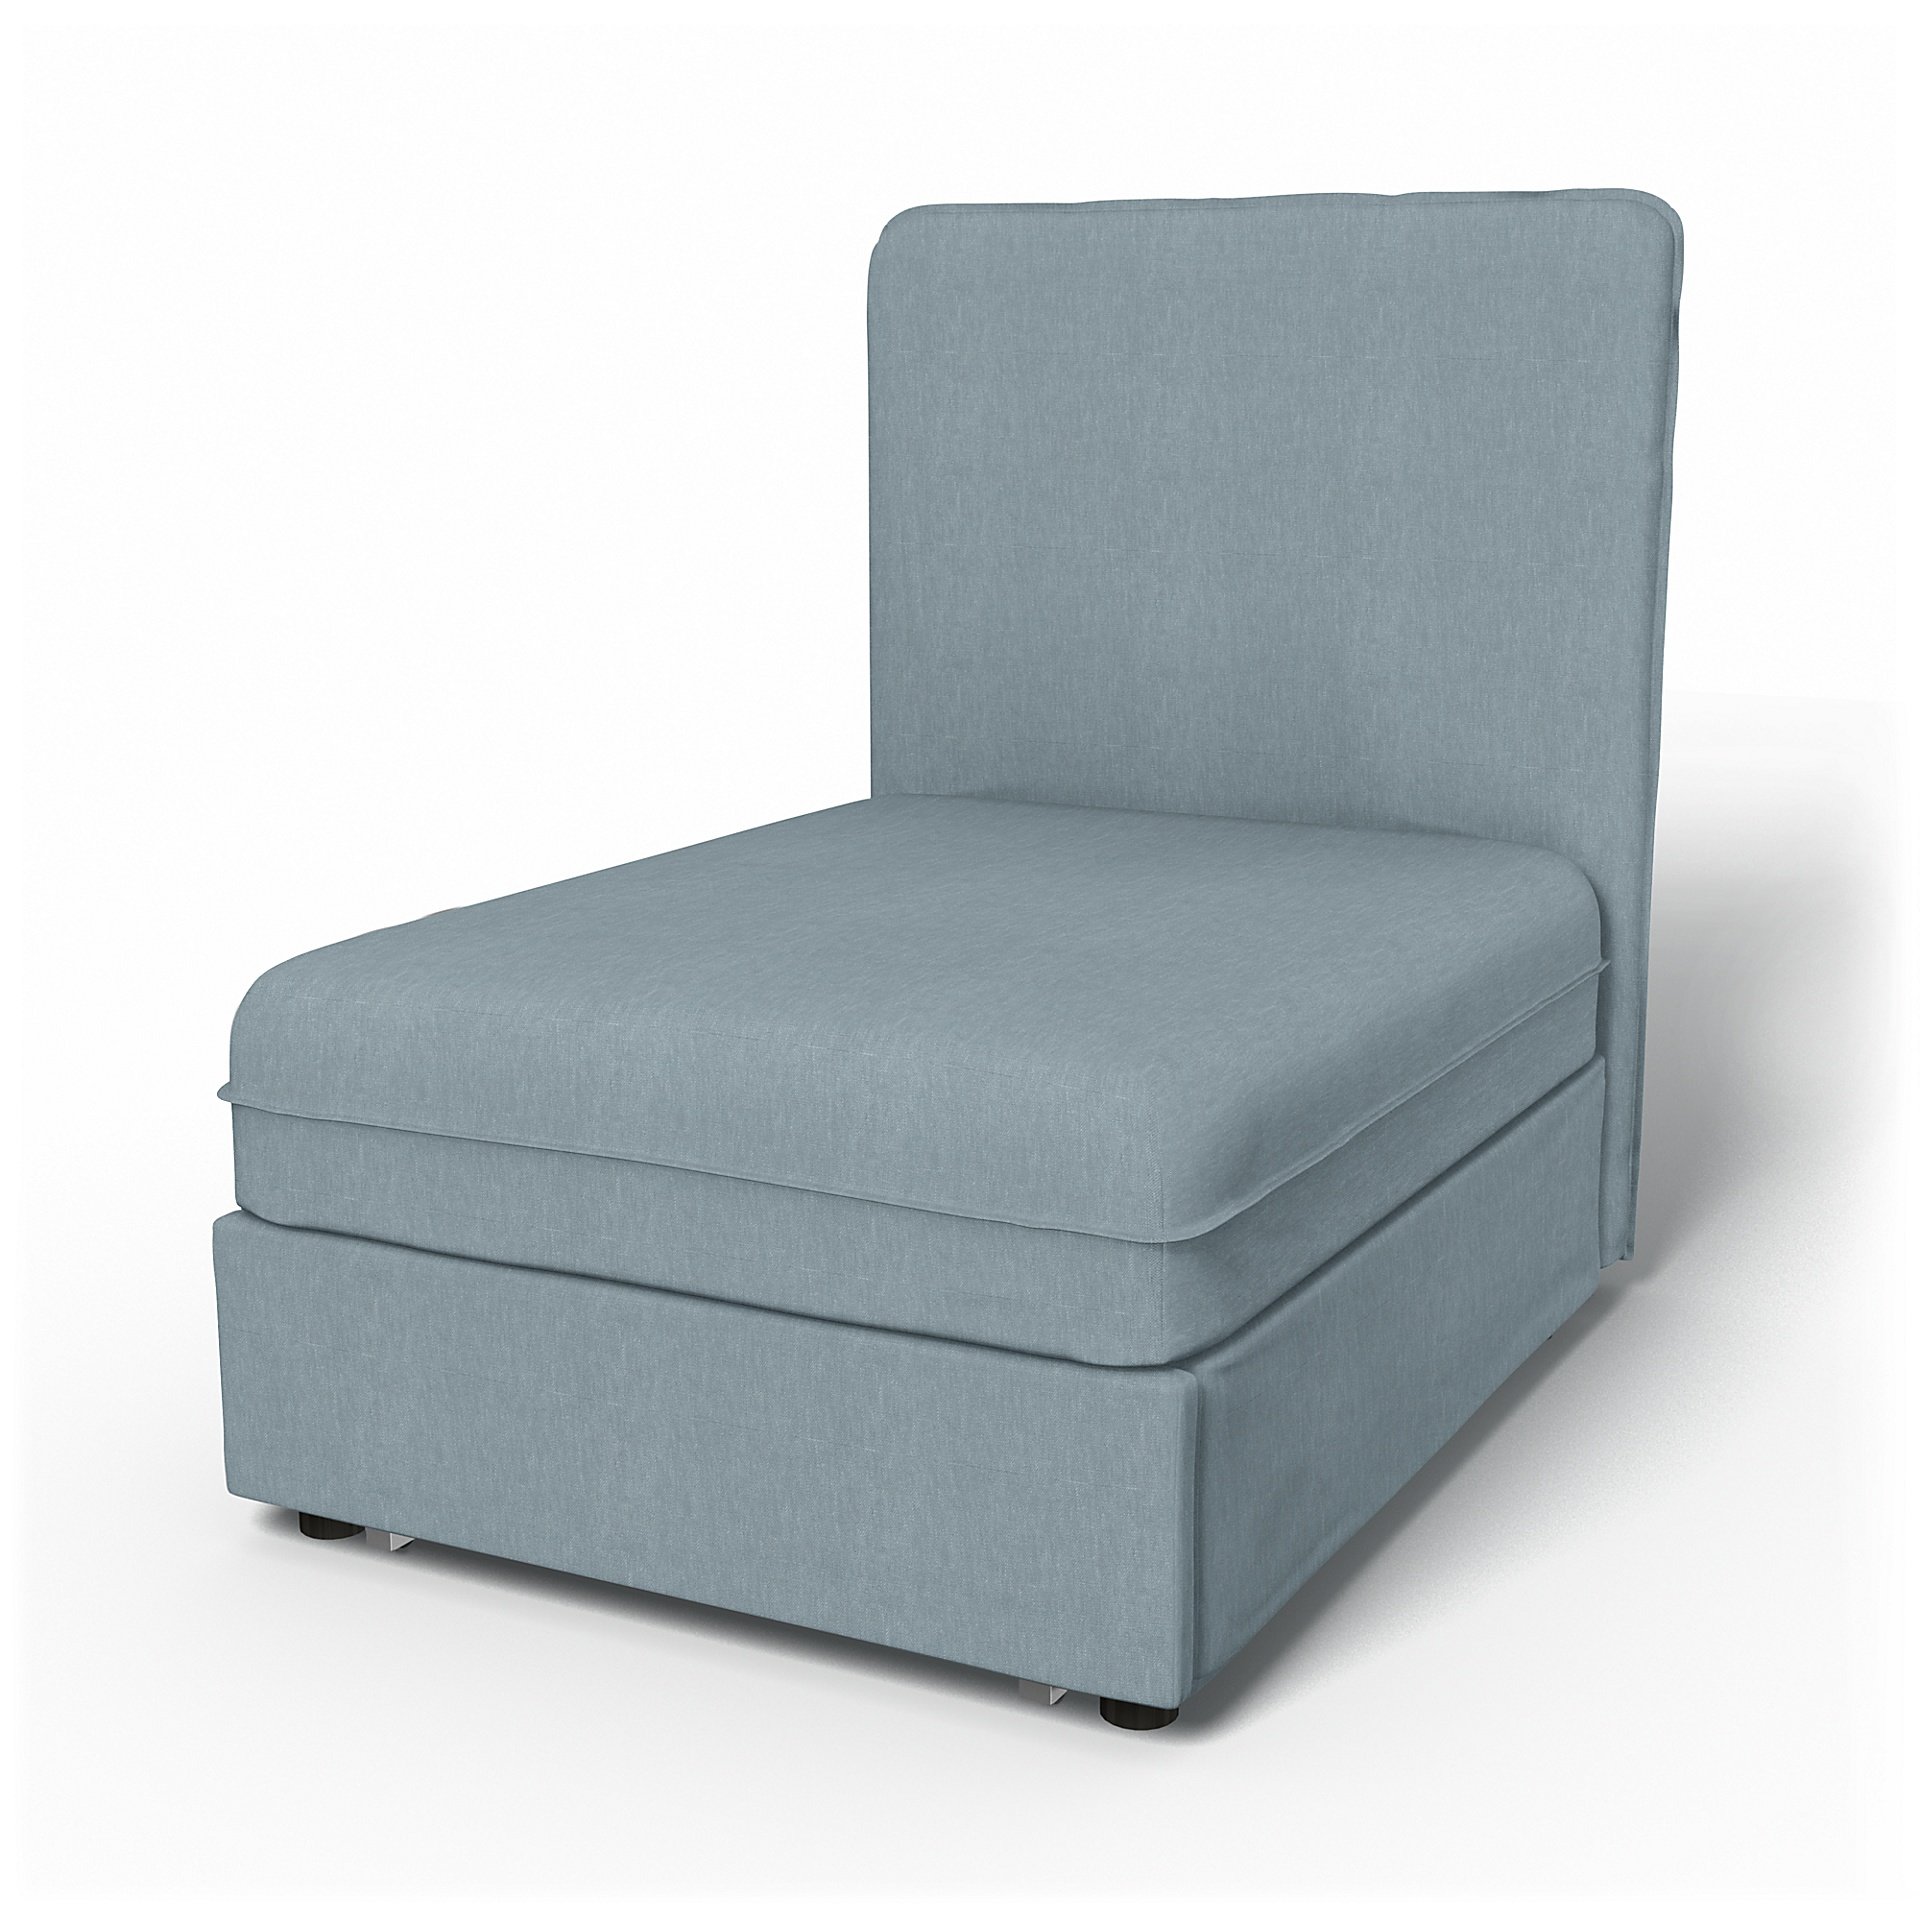 IKEA - Vallentuna Seat Module with High Back Sofa Bed Cover (80x100x46cm), Dusty Blue, Linen - Bemz